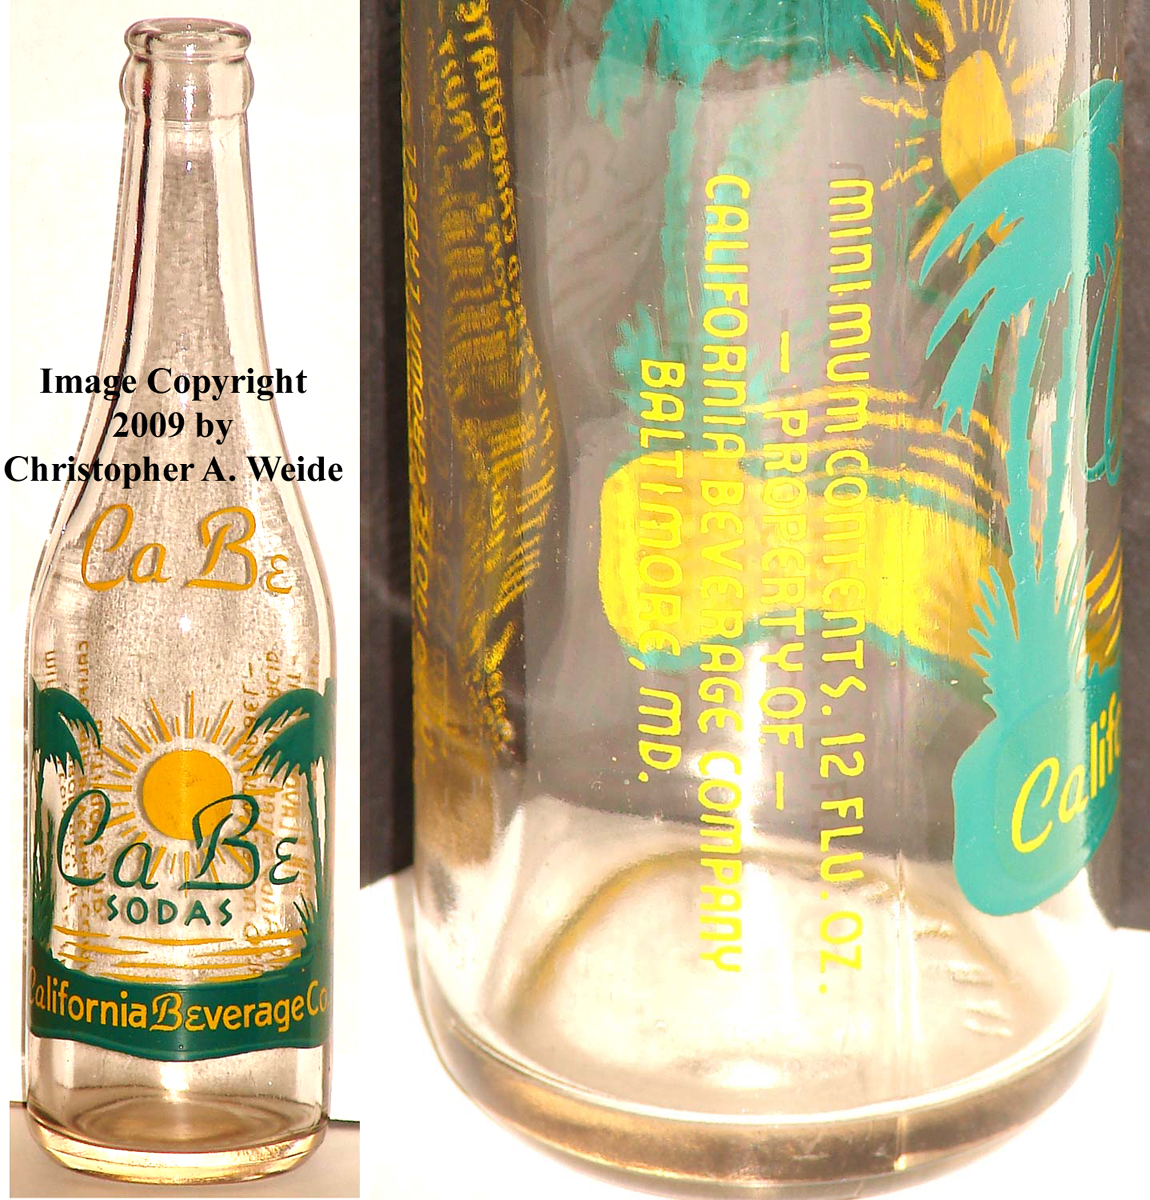 Details about   Vintage soda pop bottle label TWIN LIGHTS GINGER ALE lighthouses pic quart Mass